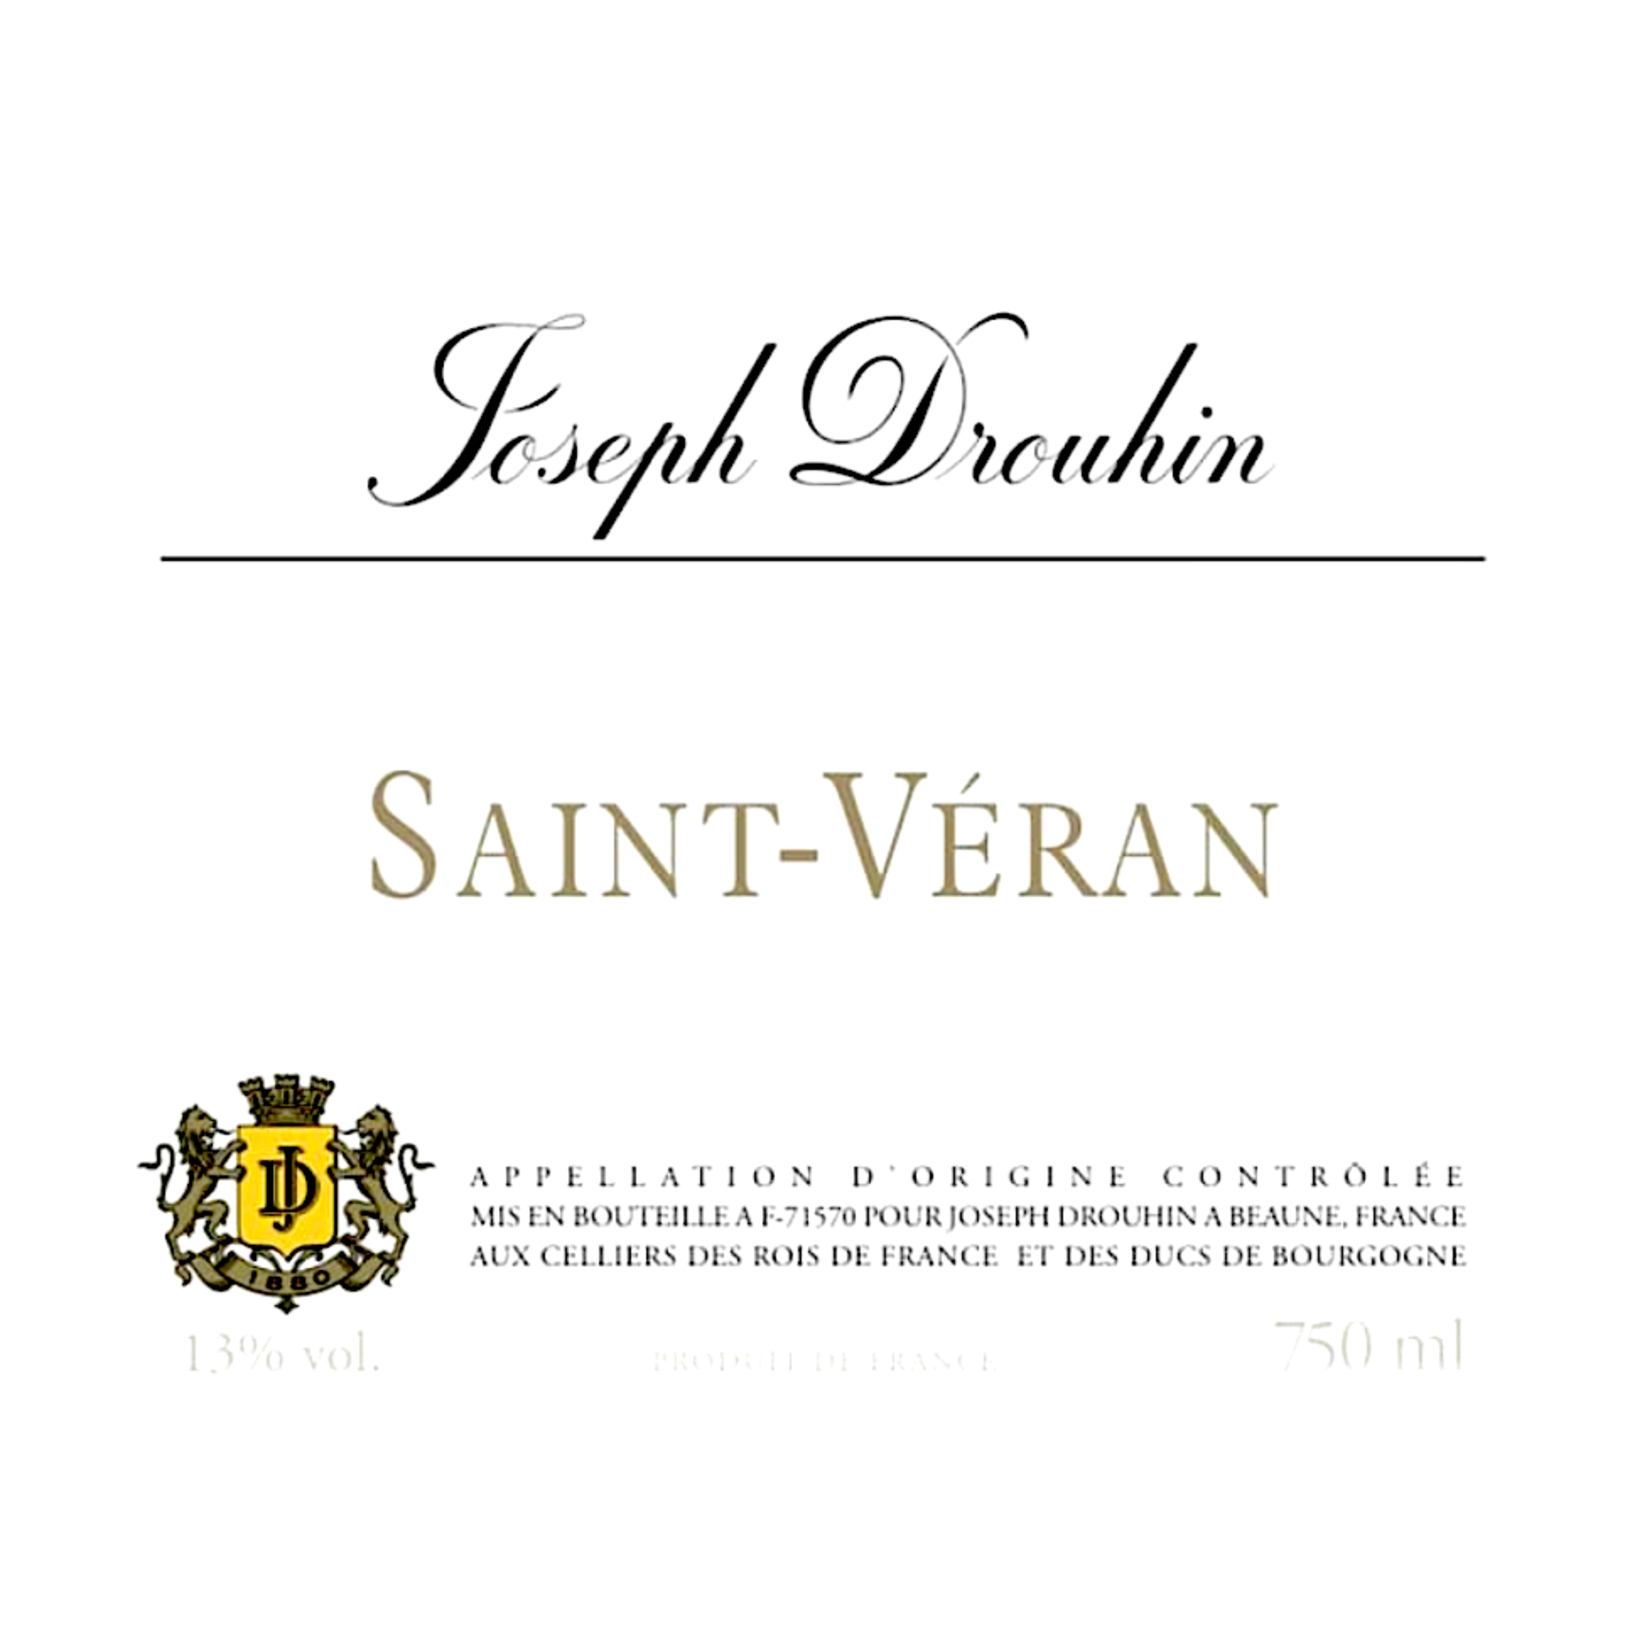 Joseph Drouhin Joseph Drouhin Saint Veran 2020 Burgundy, France